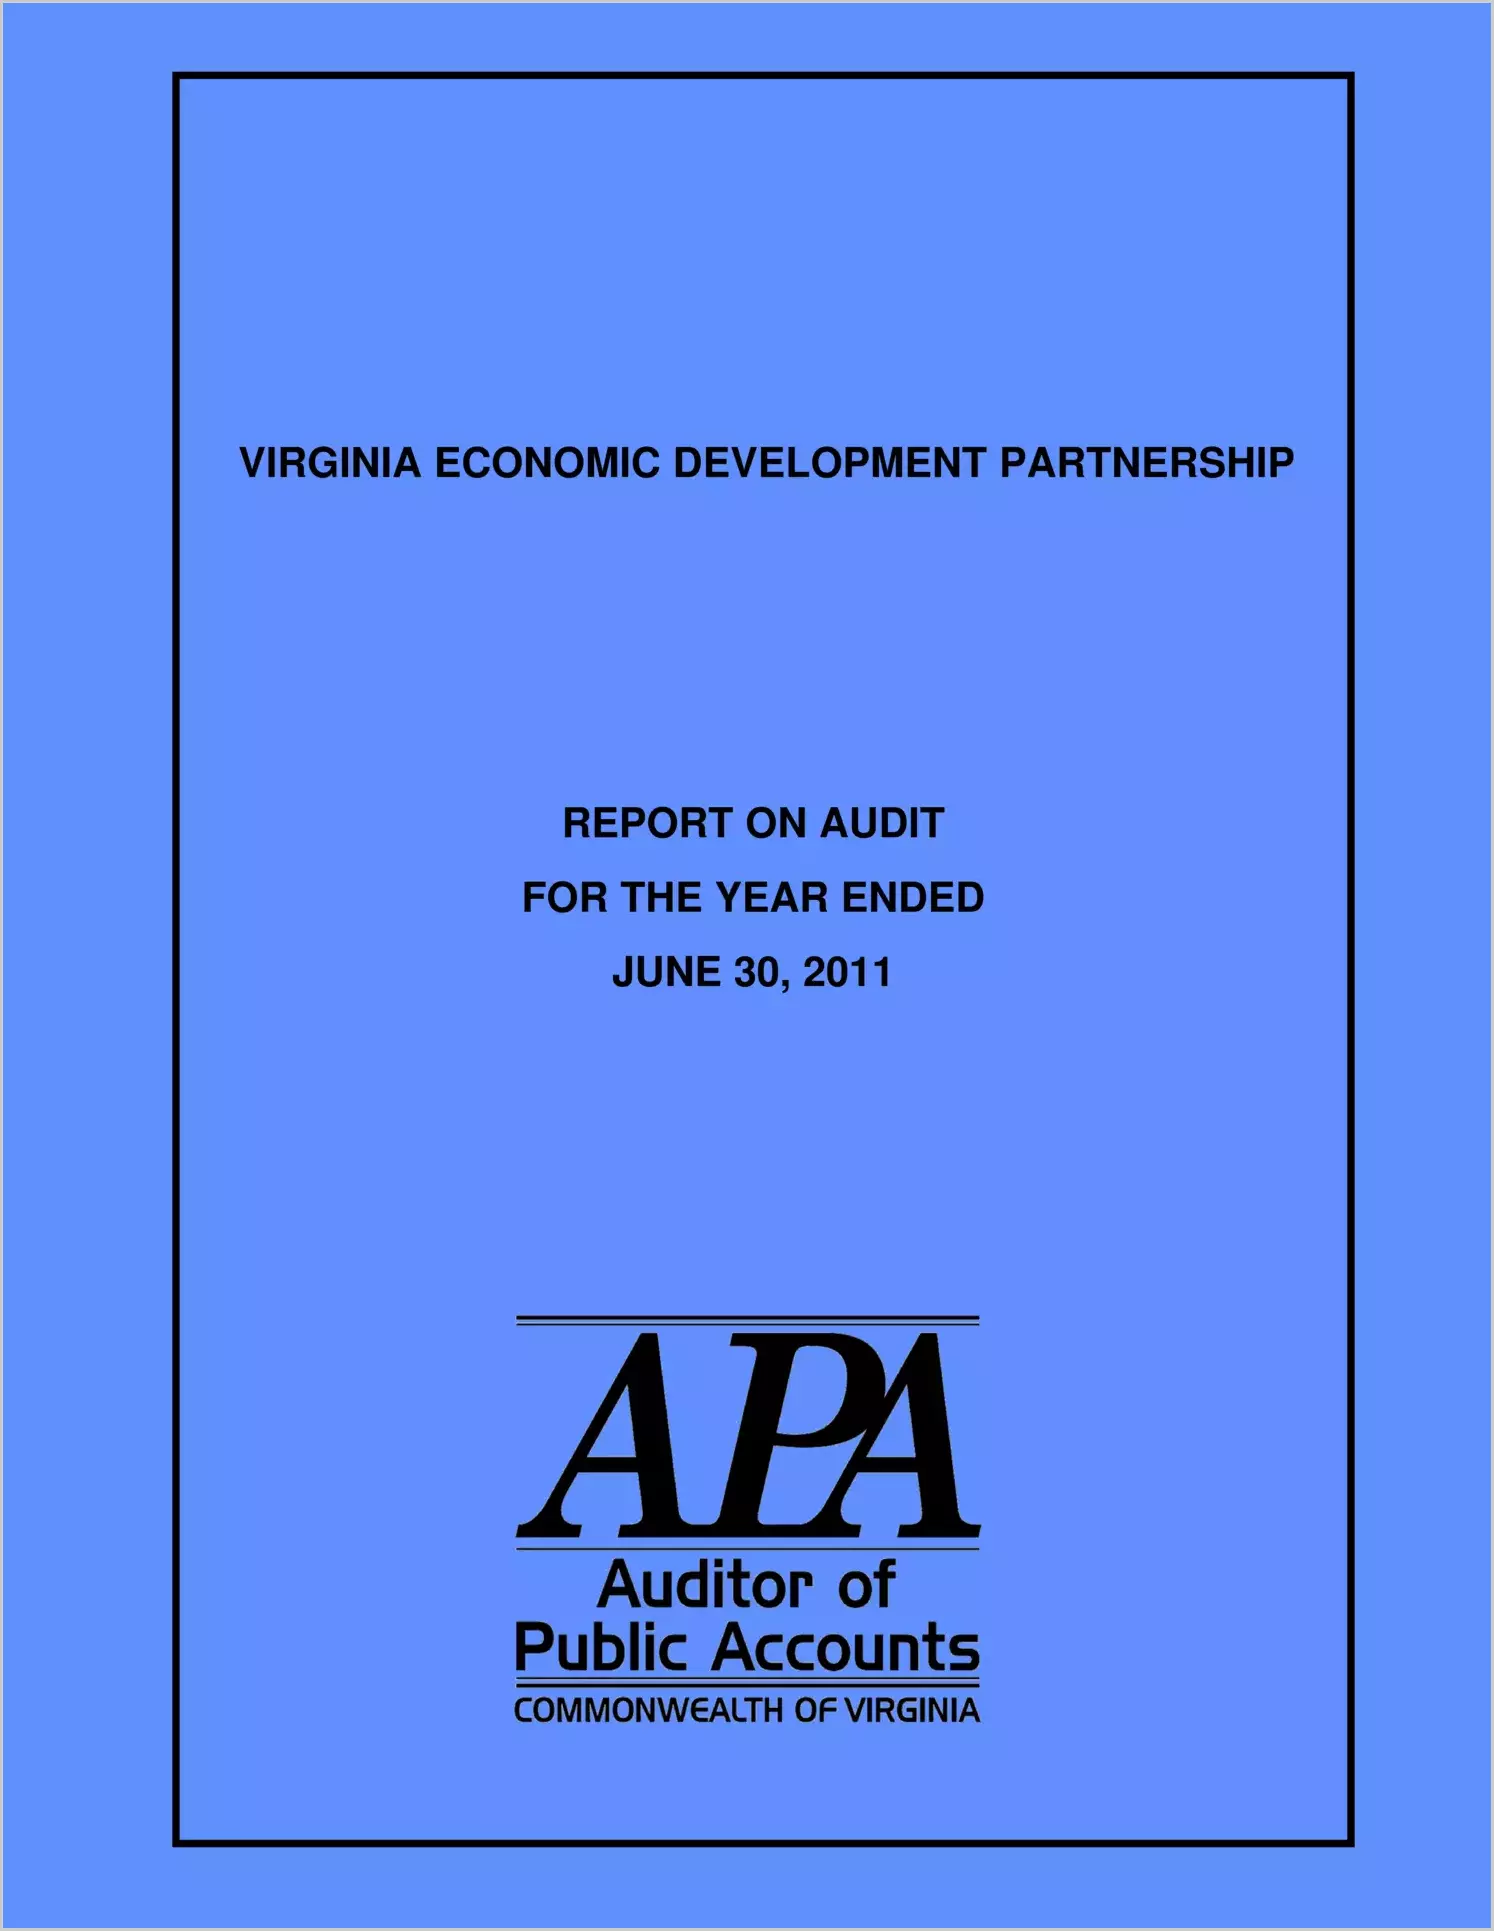 Virginia Economic Development Partnership for the year ended June 30, 2011